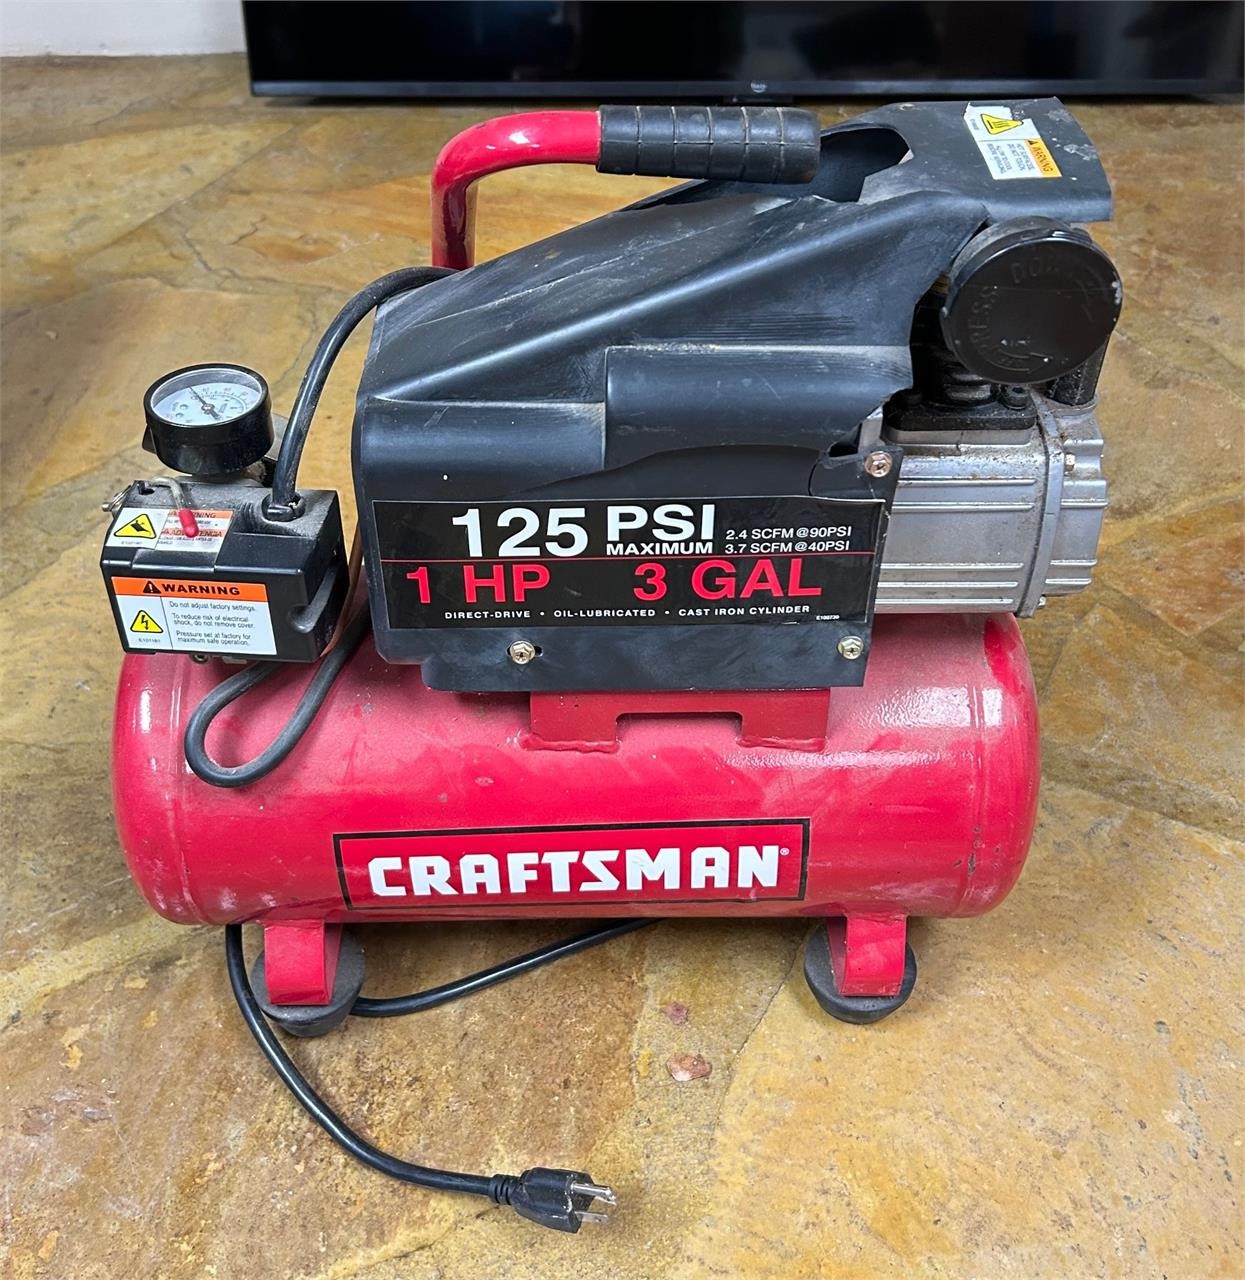 Craftsman 125 psi, 1 HP, 3 Gallon Air Compressor